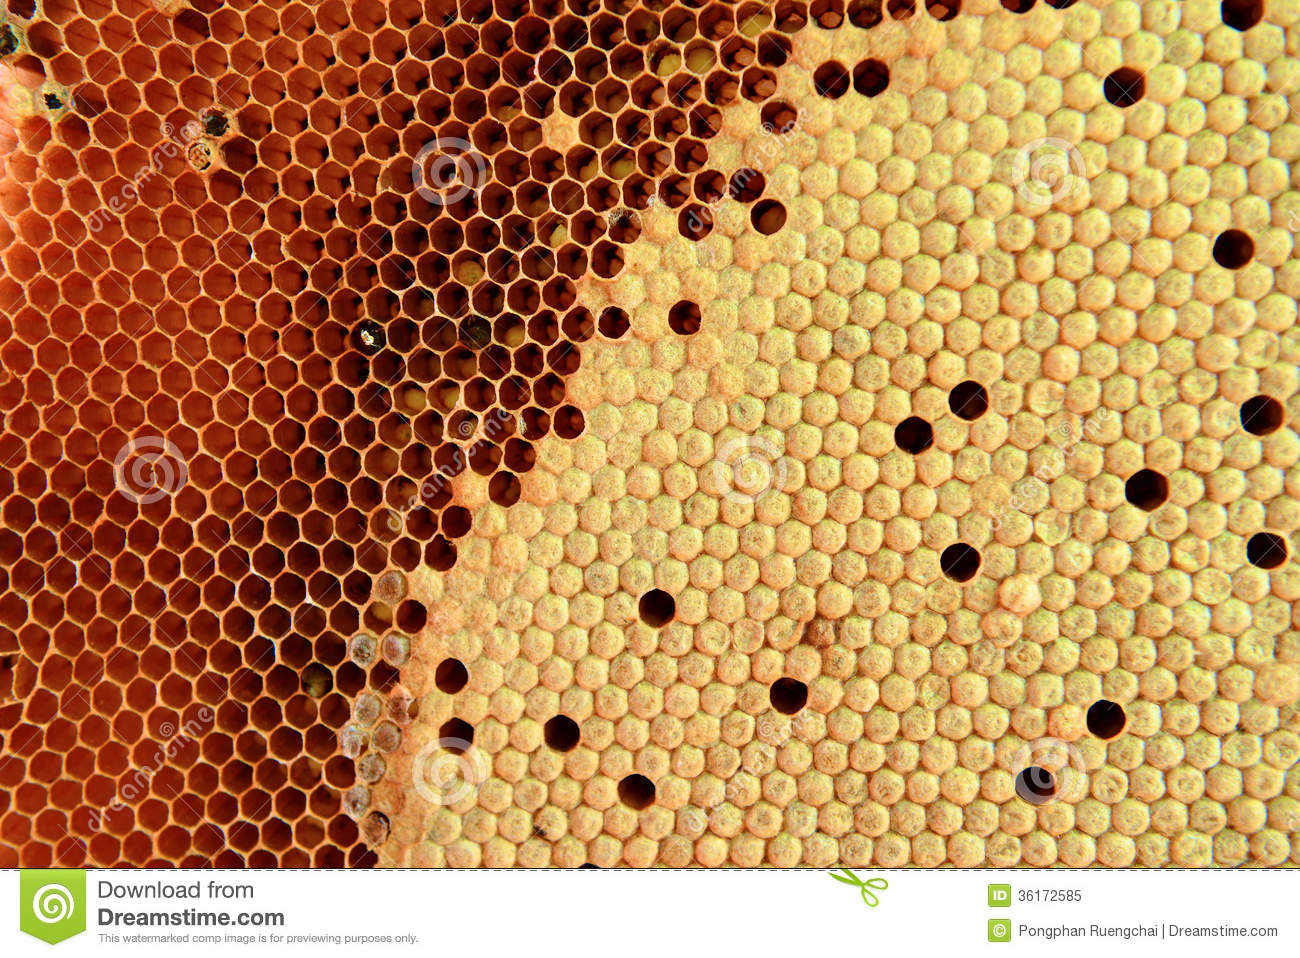 Honeycomb Royalty Free Stock Photo   Image  36172585